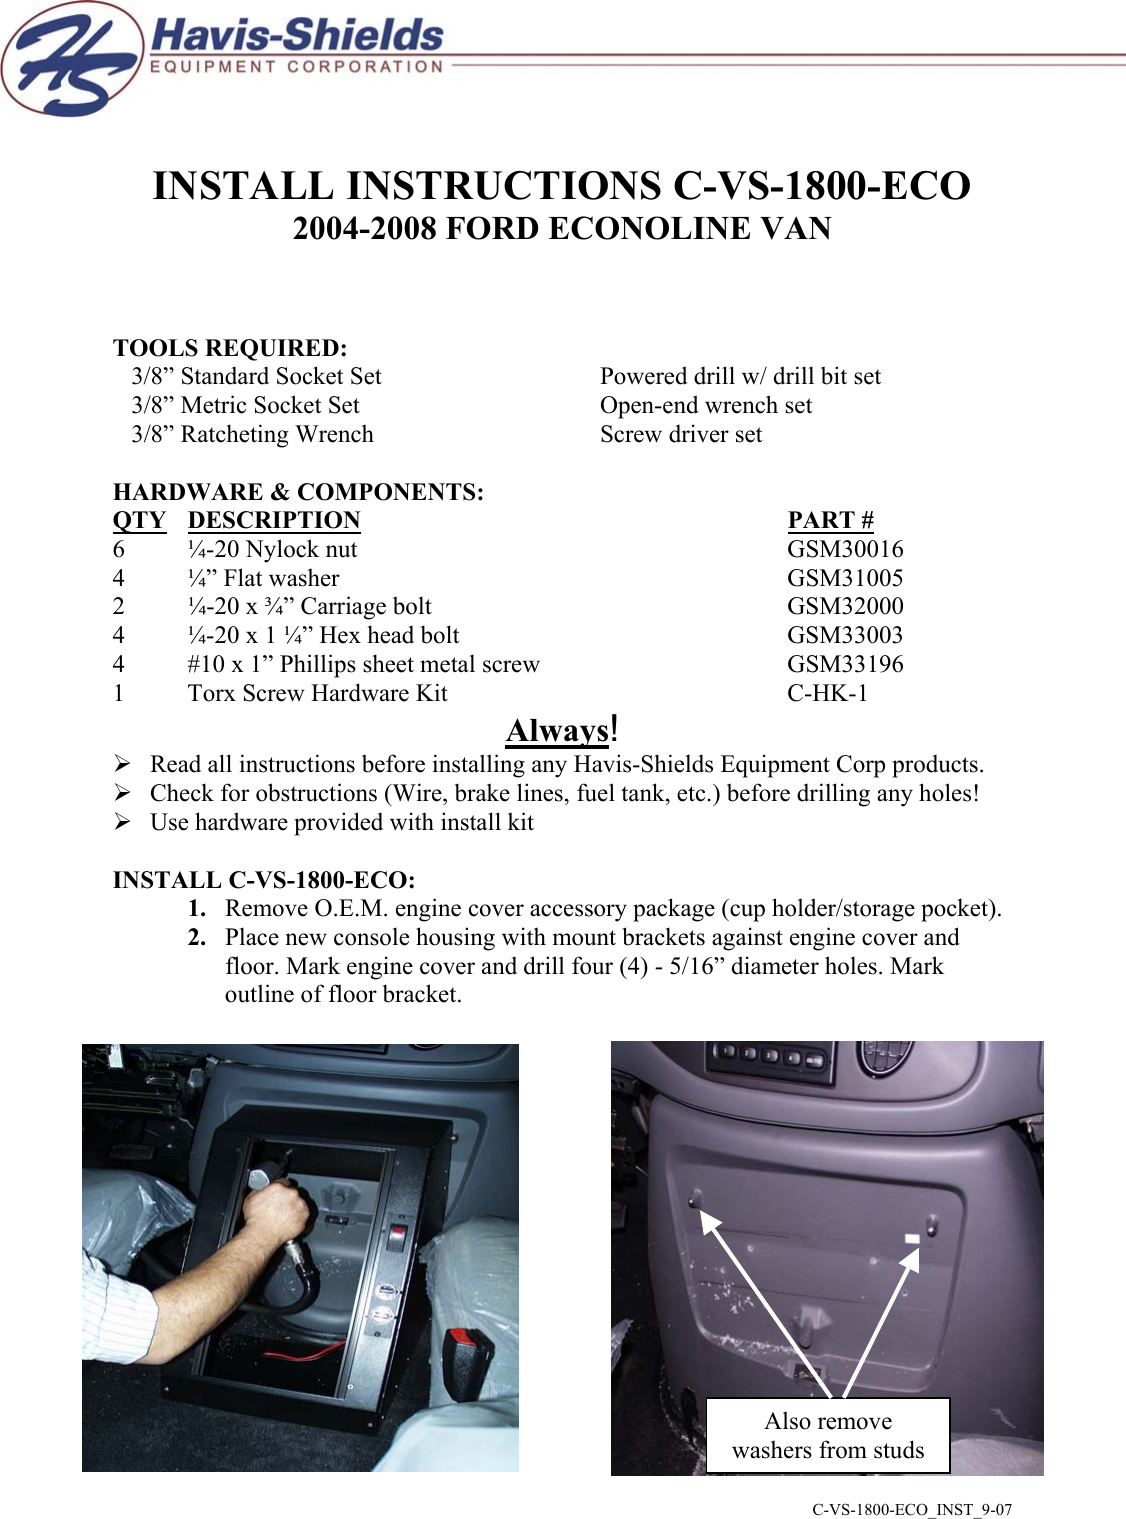 ford econoline 2008 manual